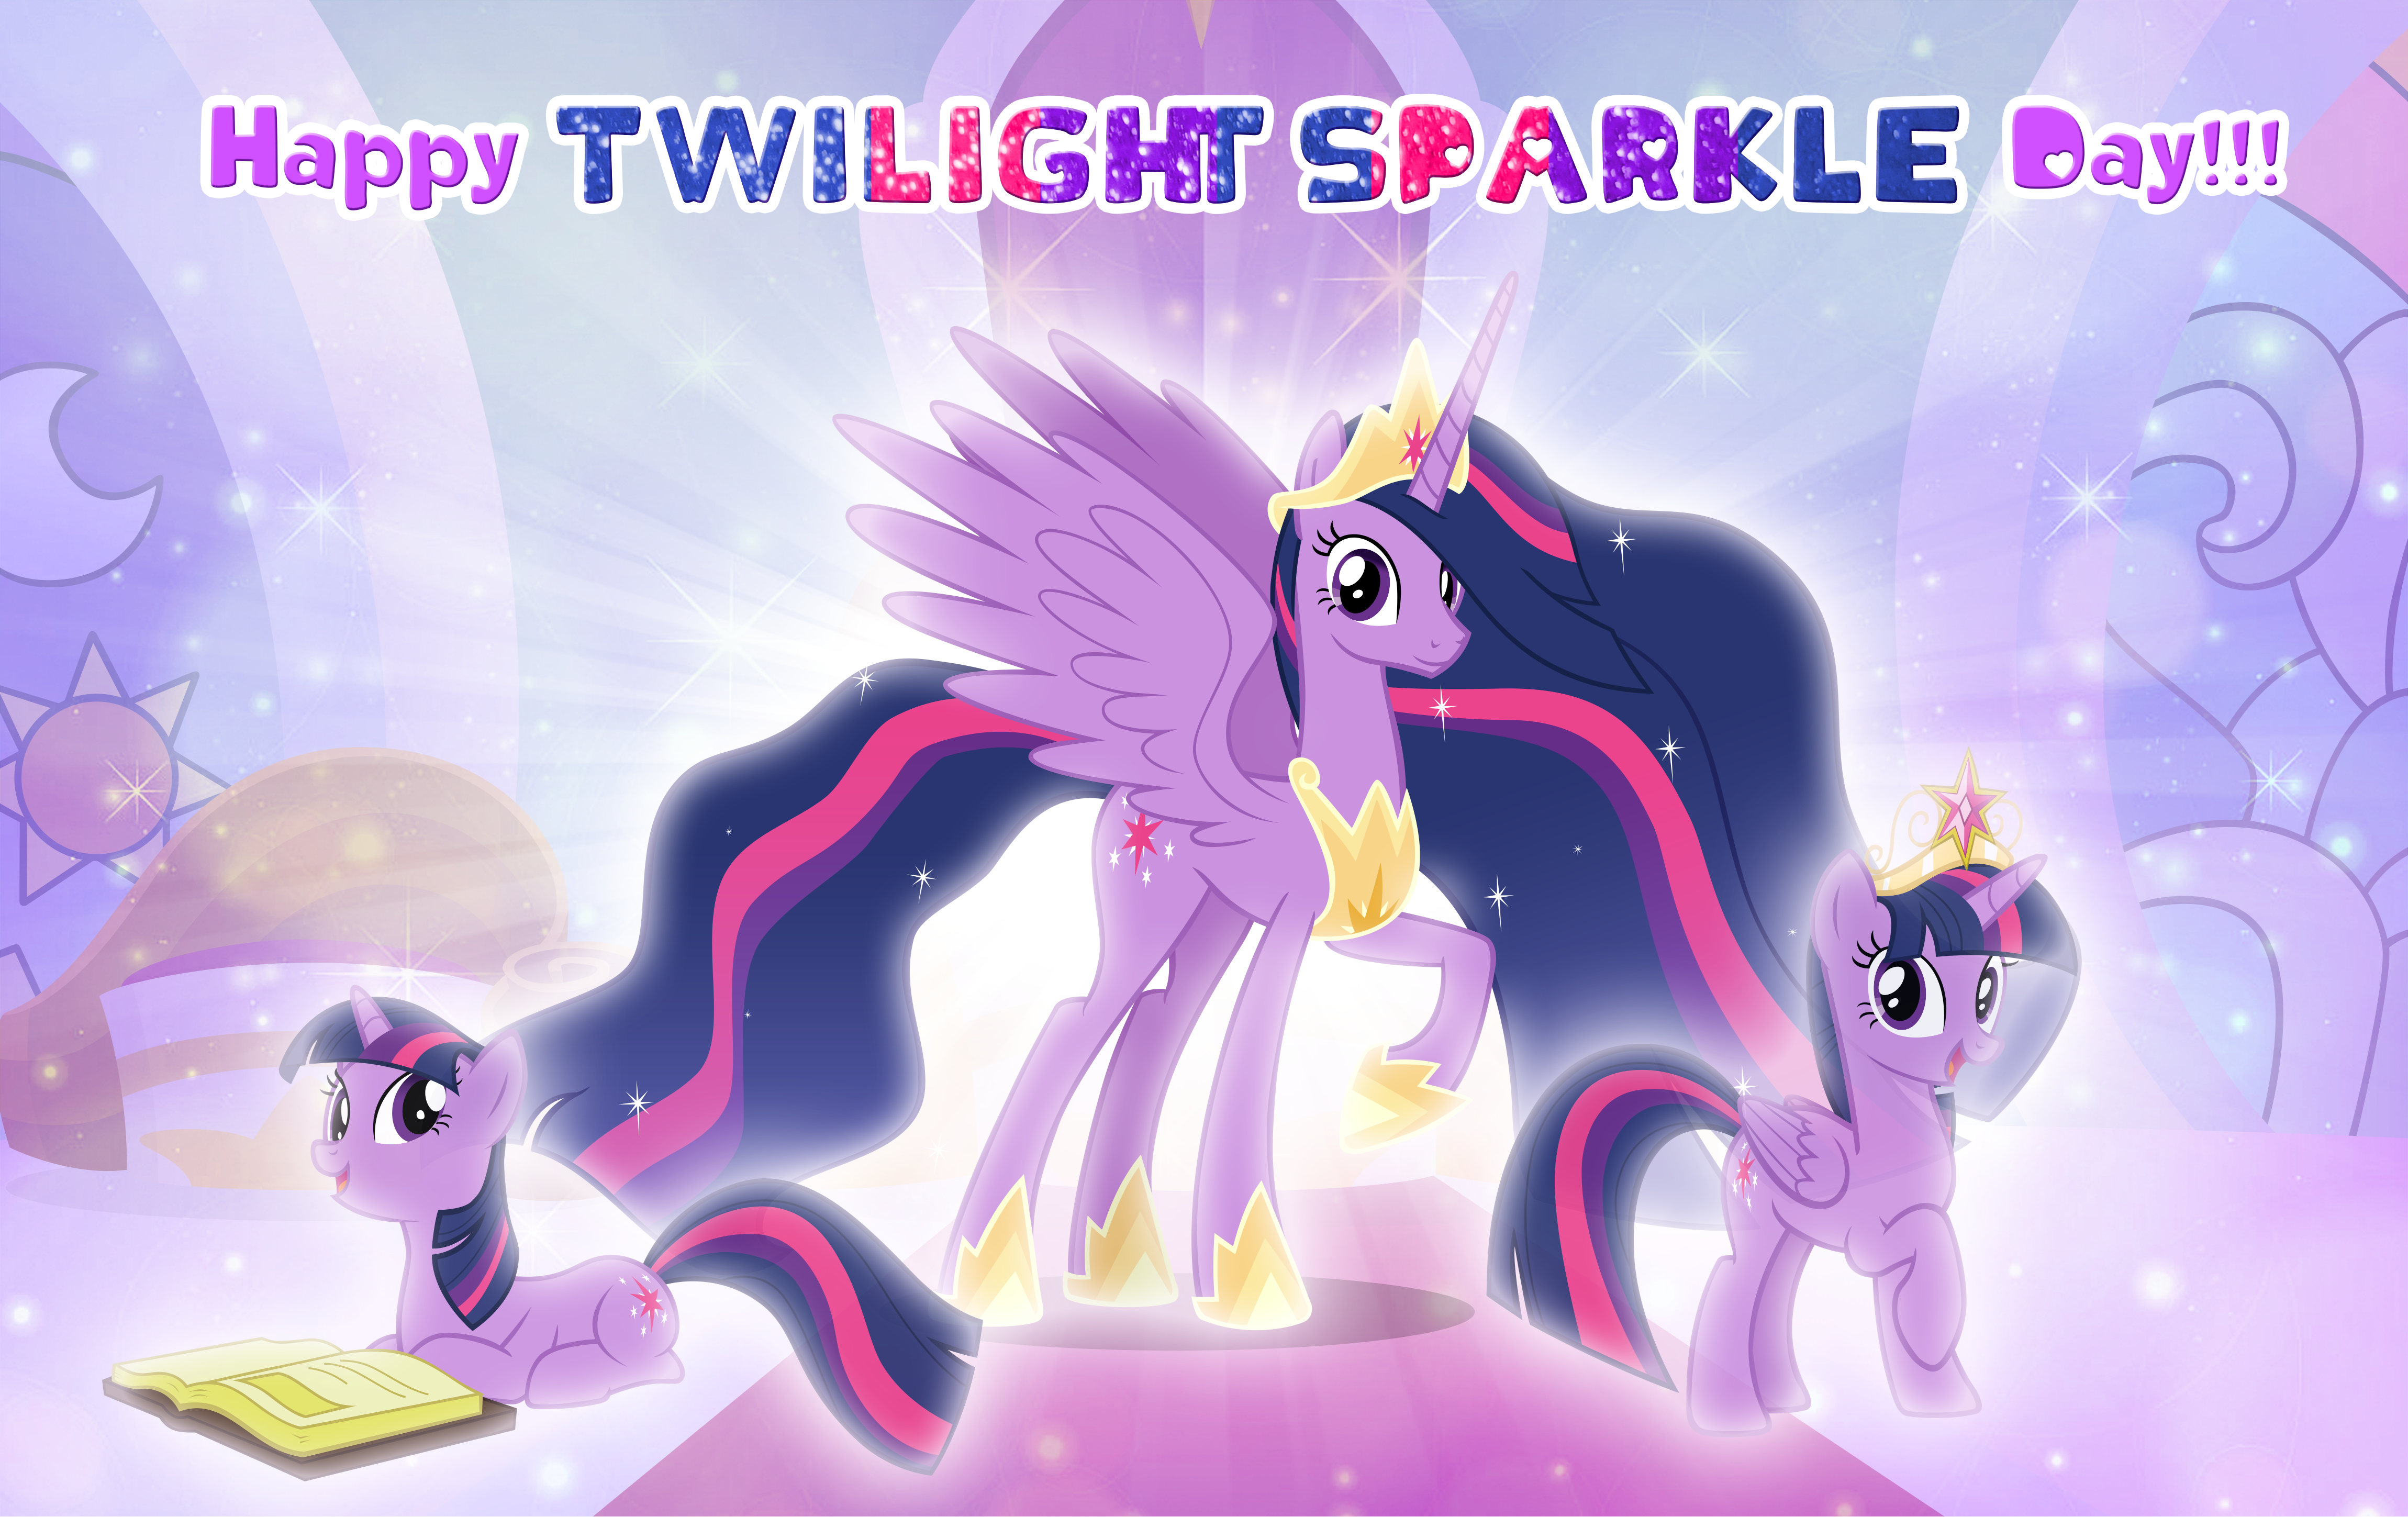 Neo Princess Twilight Sparkle by Luuandherdraws on DeviantArt